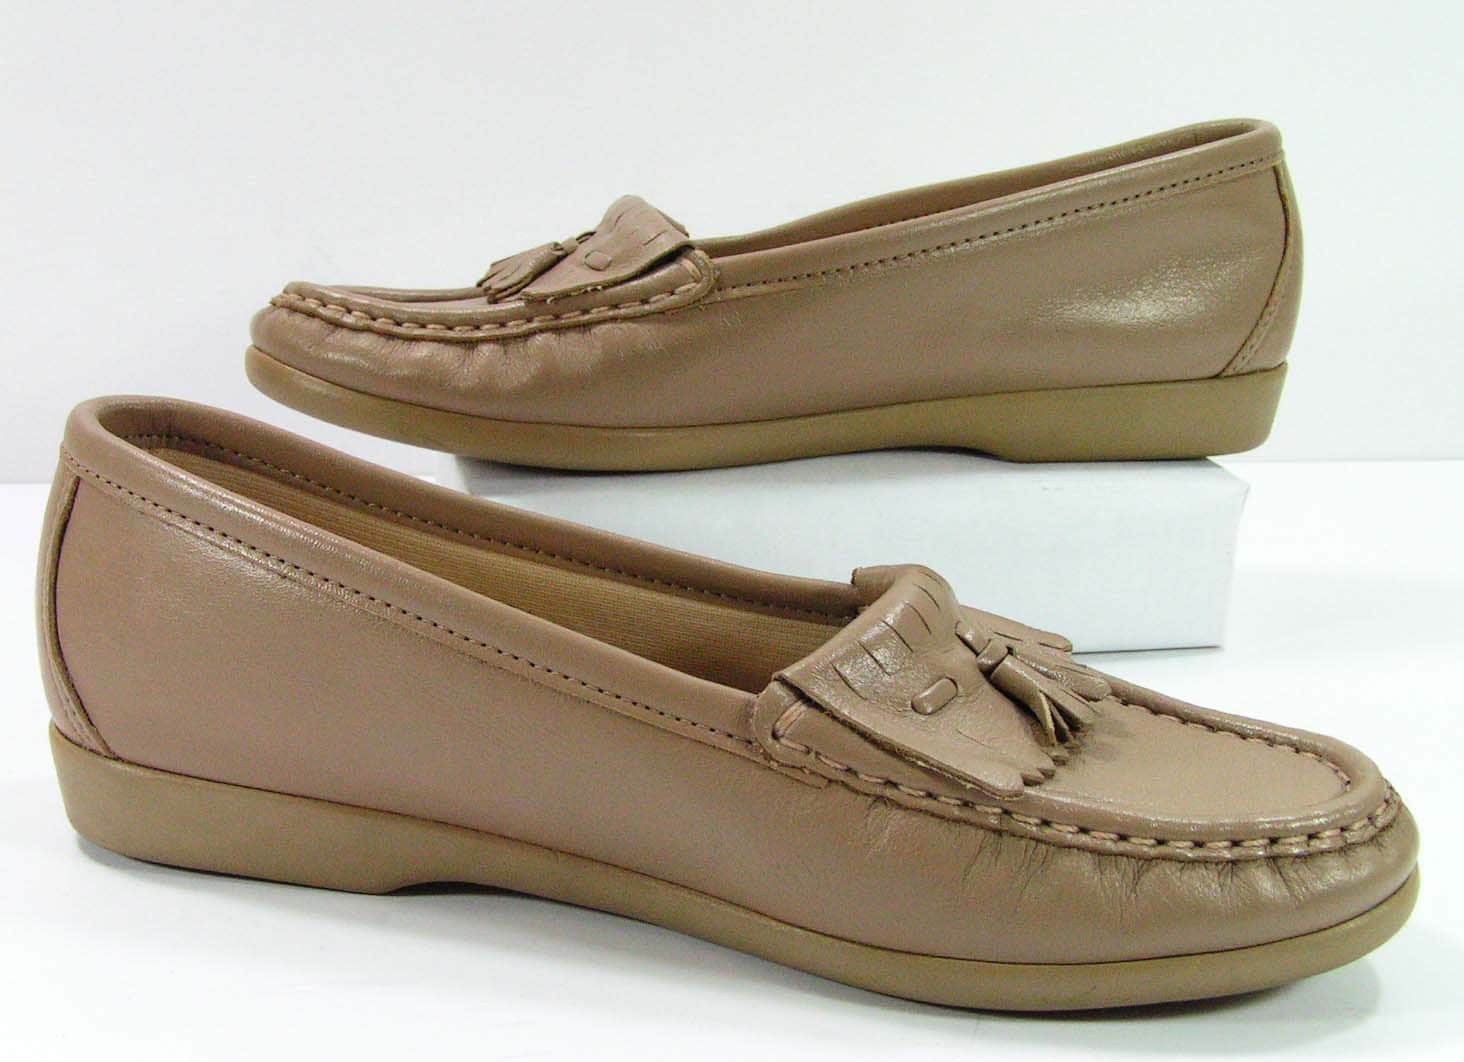 sas tassel loafers shoes womens 6 M B tan khaki loafers